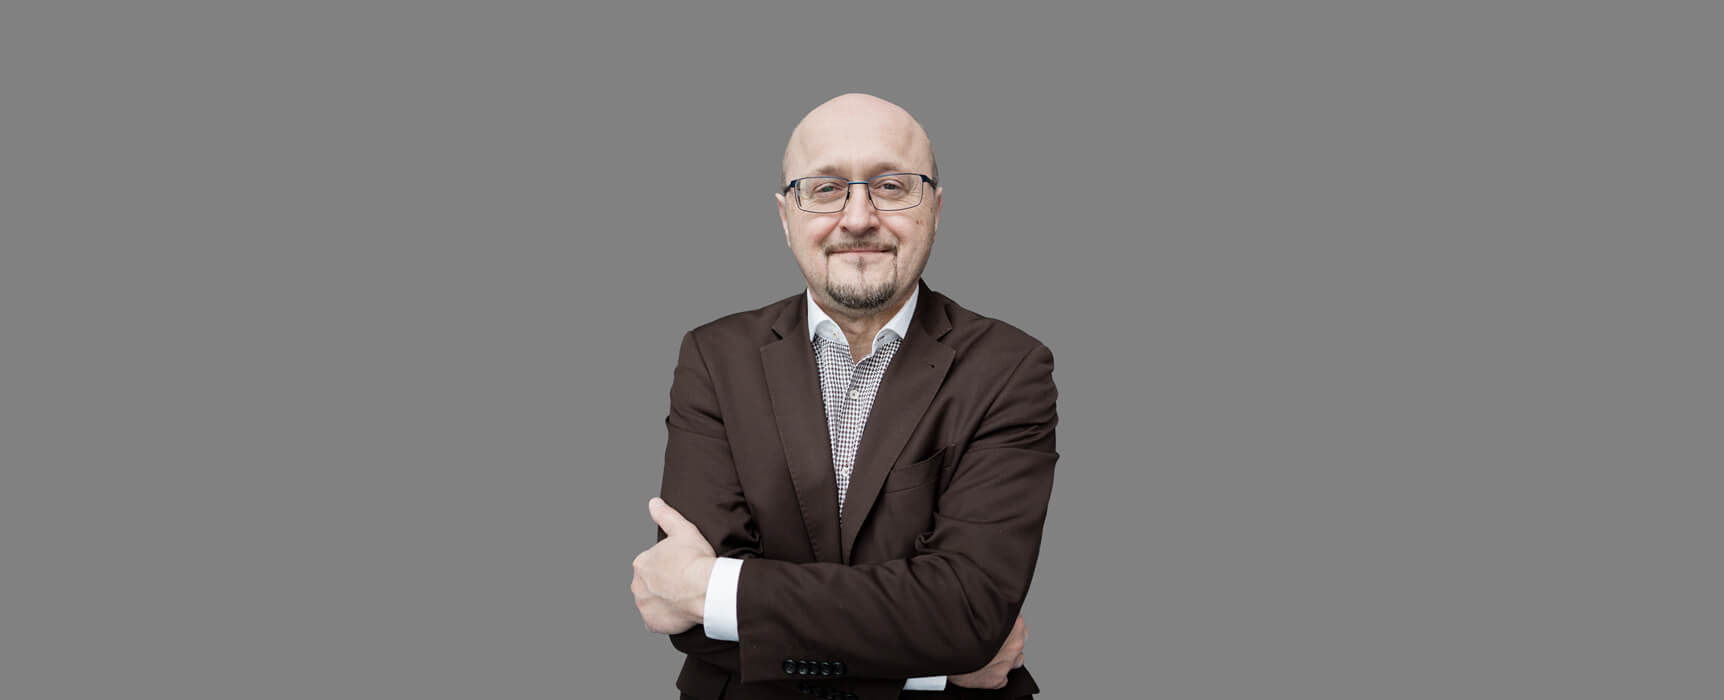 AC assistenza & consulting: Der italienische Unternehmensberater Roberto Tissino